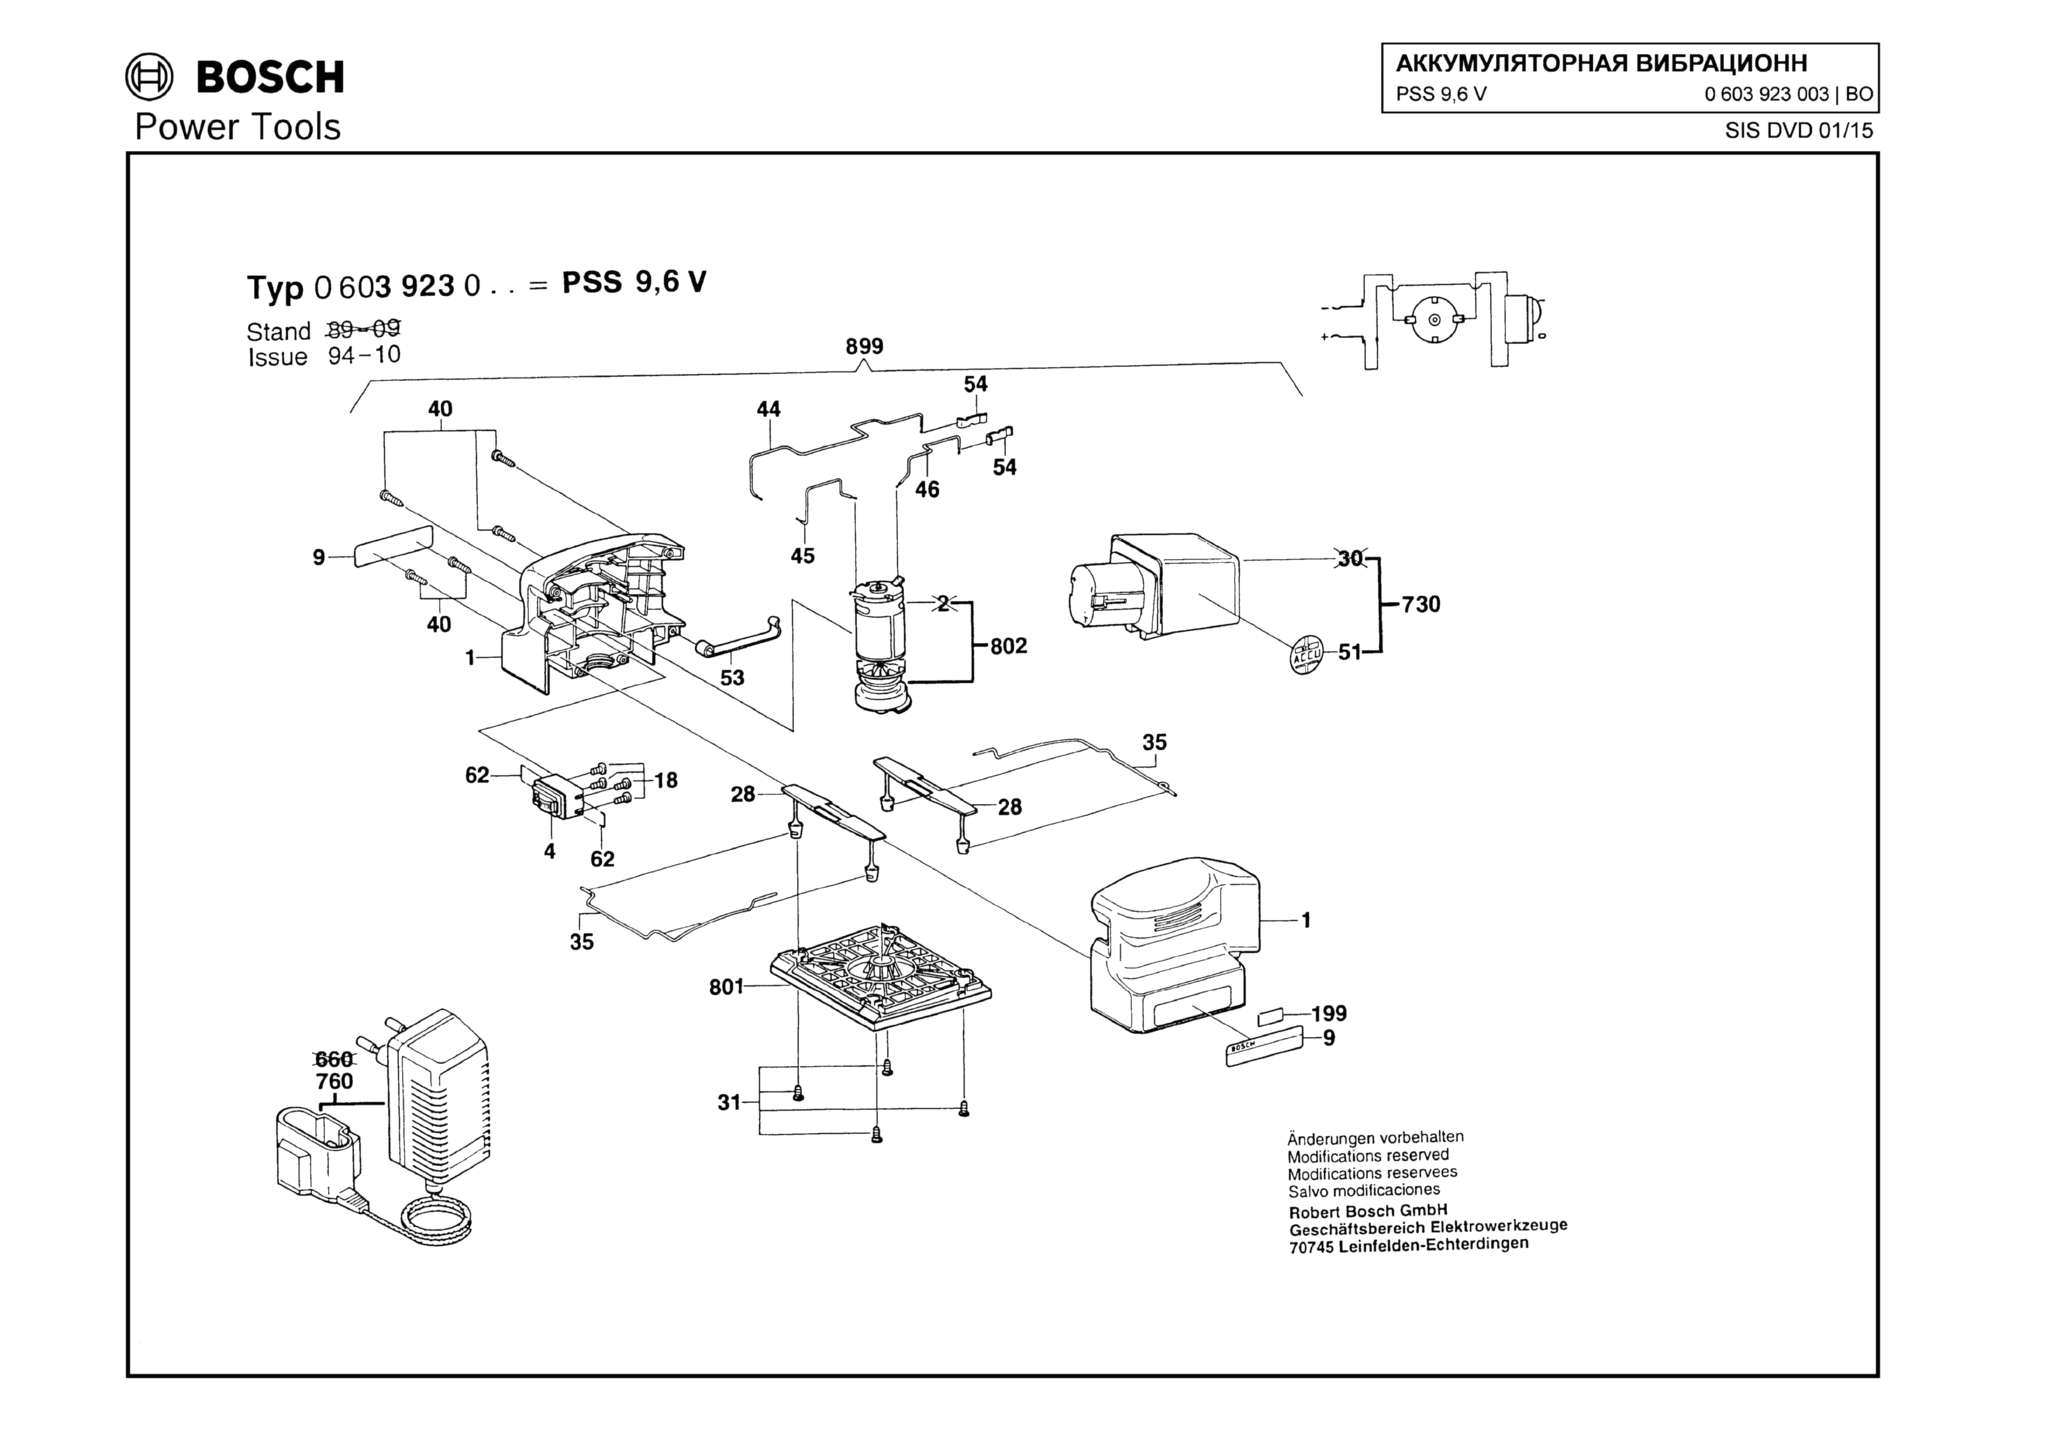 Запчасти, схема и деталировка Bosch PSS 9,6 V (ТИП 0603923003)